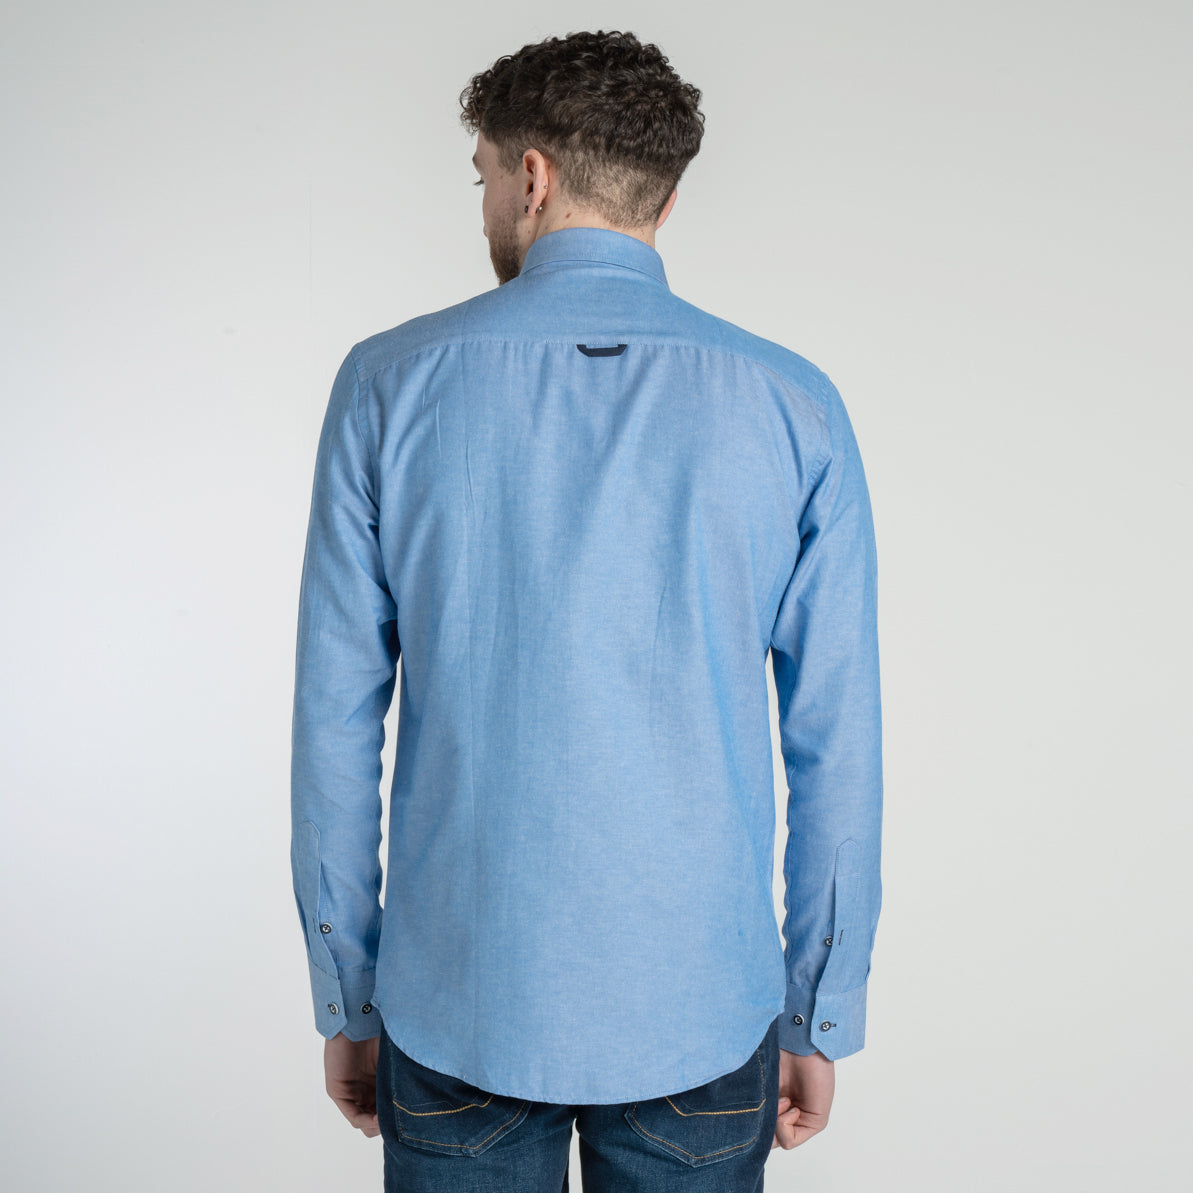 Lolland Chambray Blue Oxford Shirt